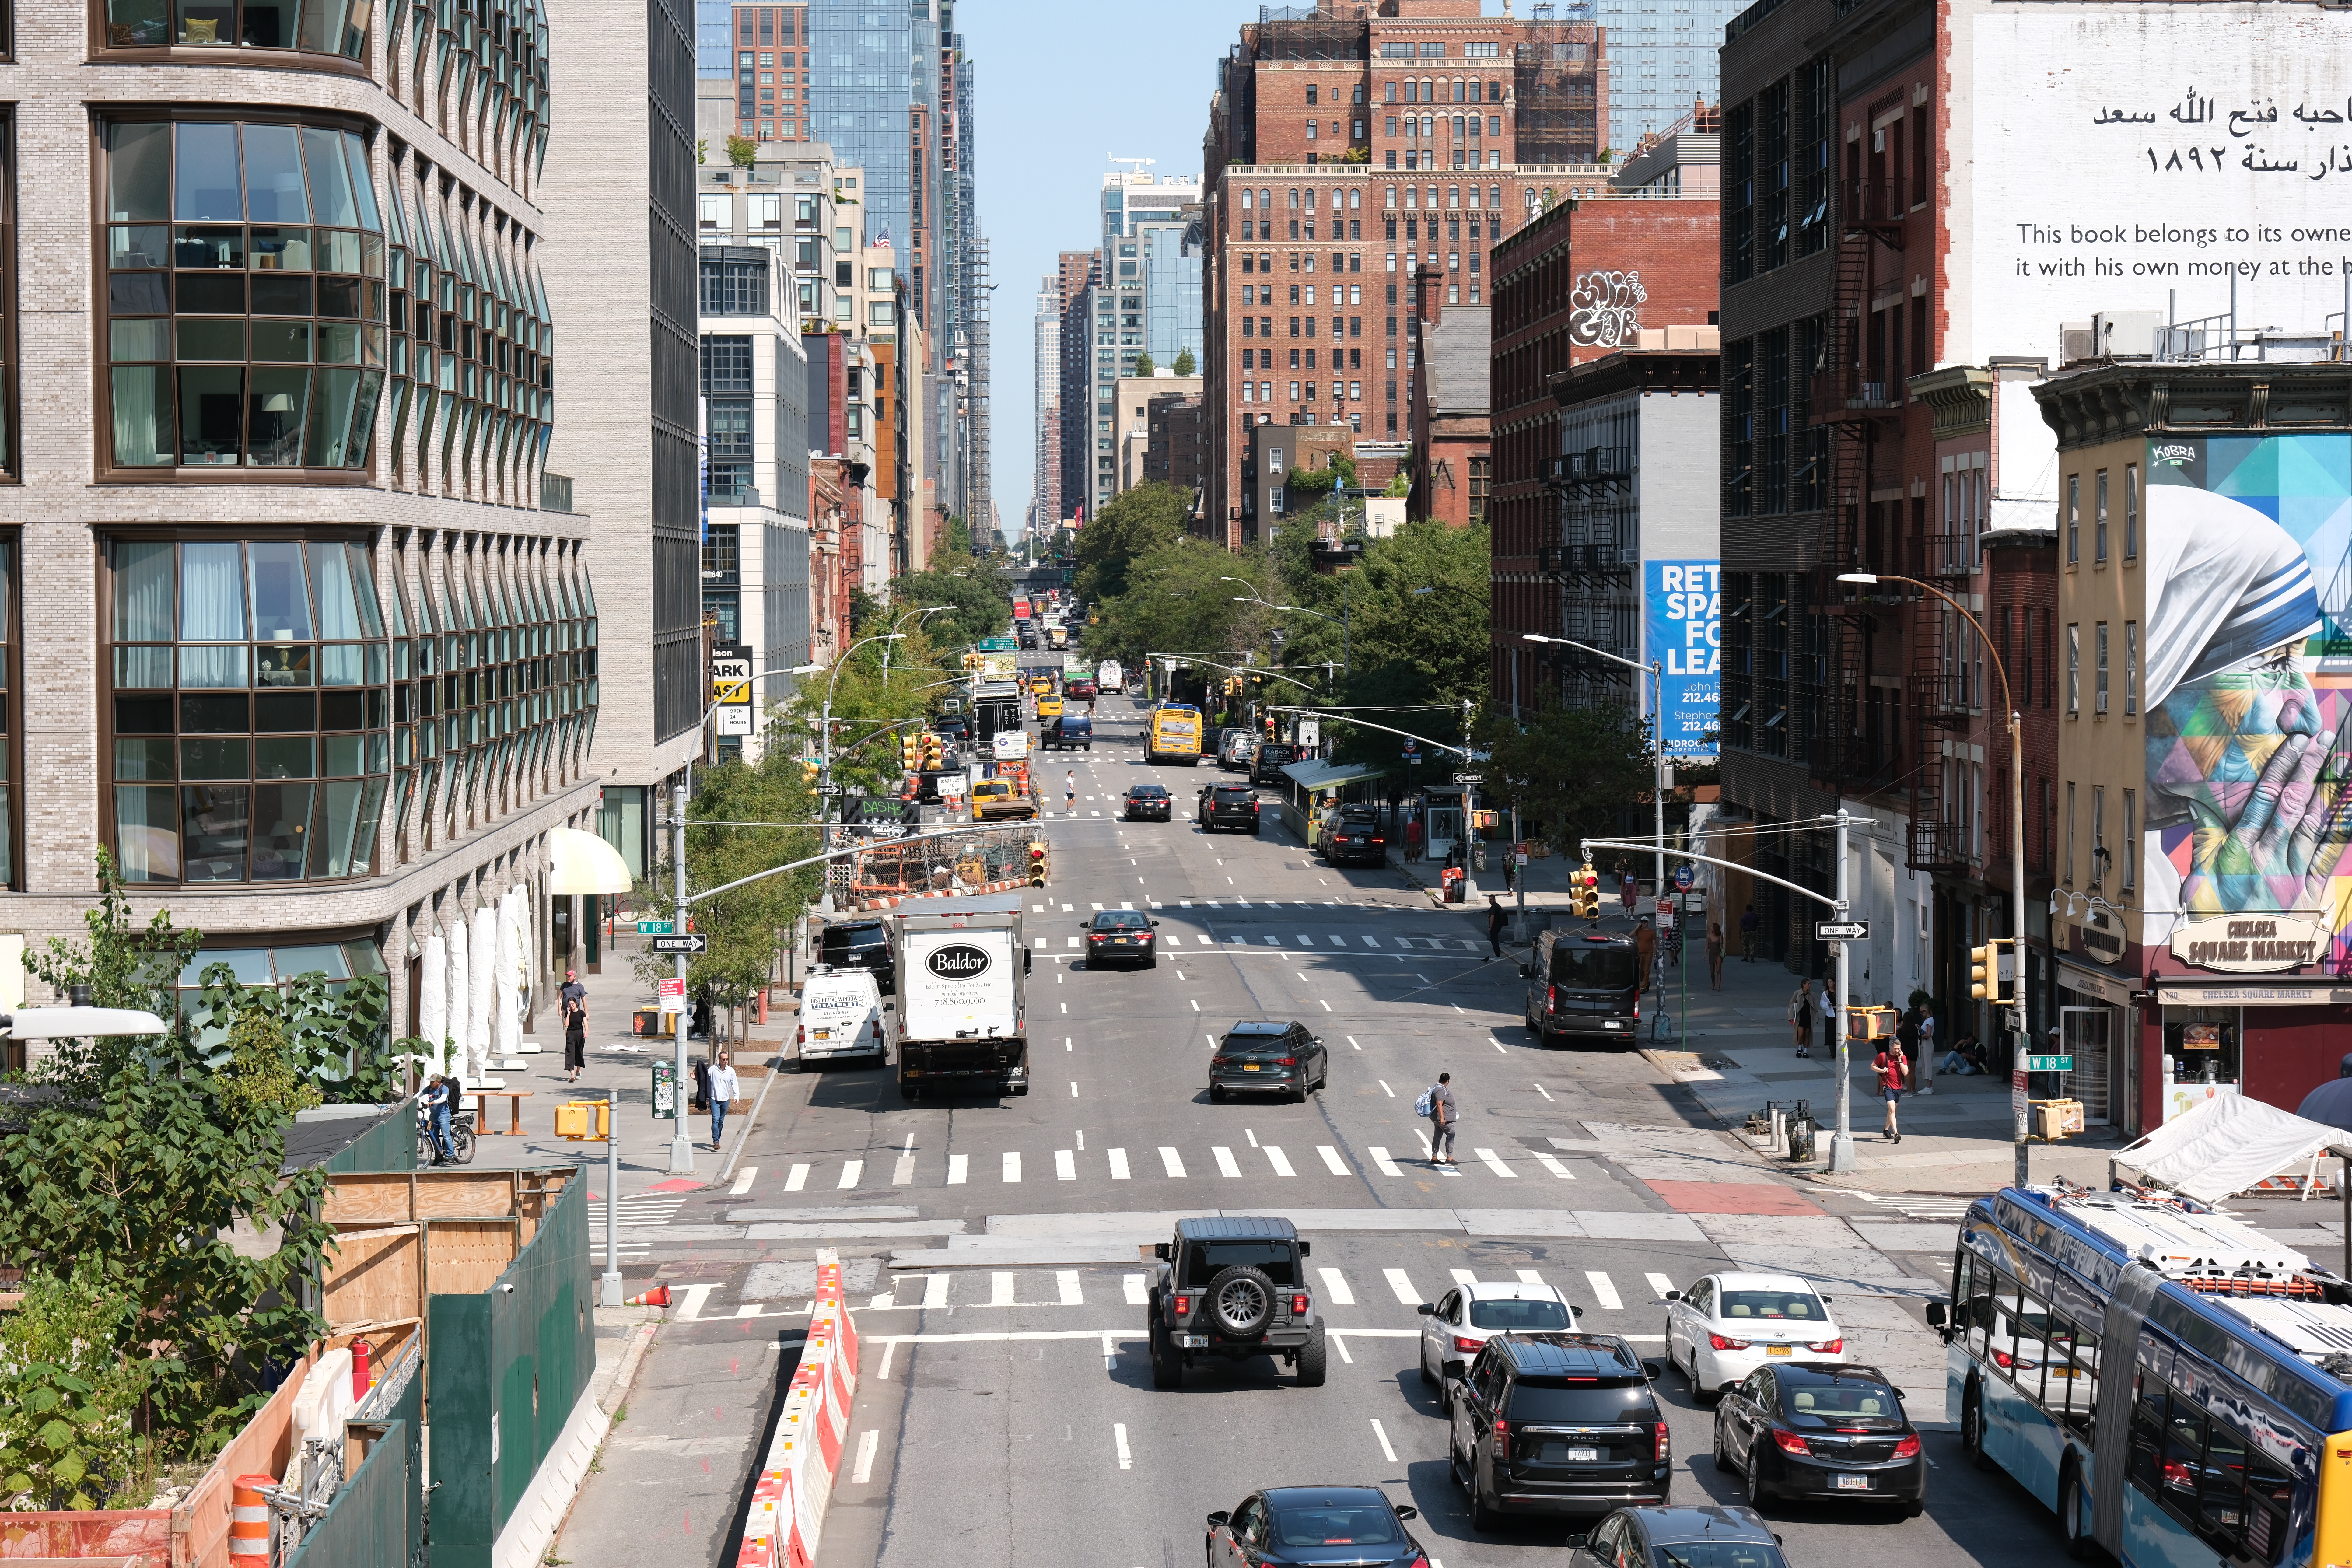 New York street, taken with X-H2, 1/640s, f/4.5, ISO125, 56mm, Joshua Waller